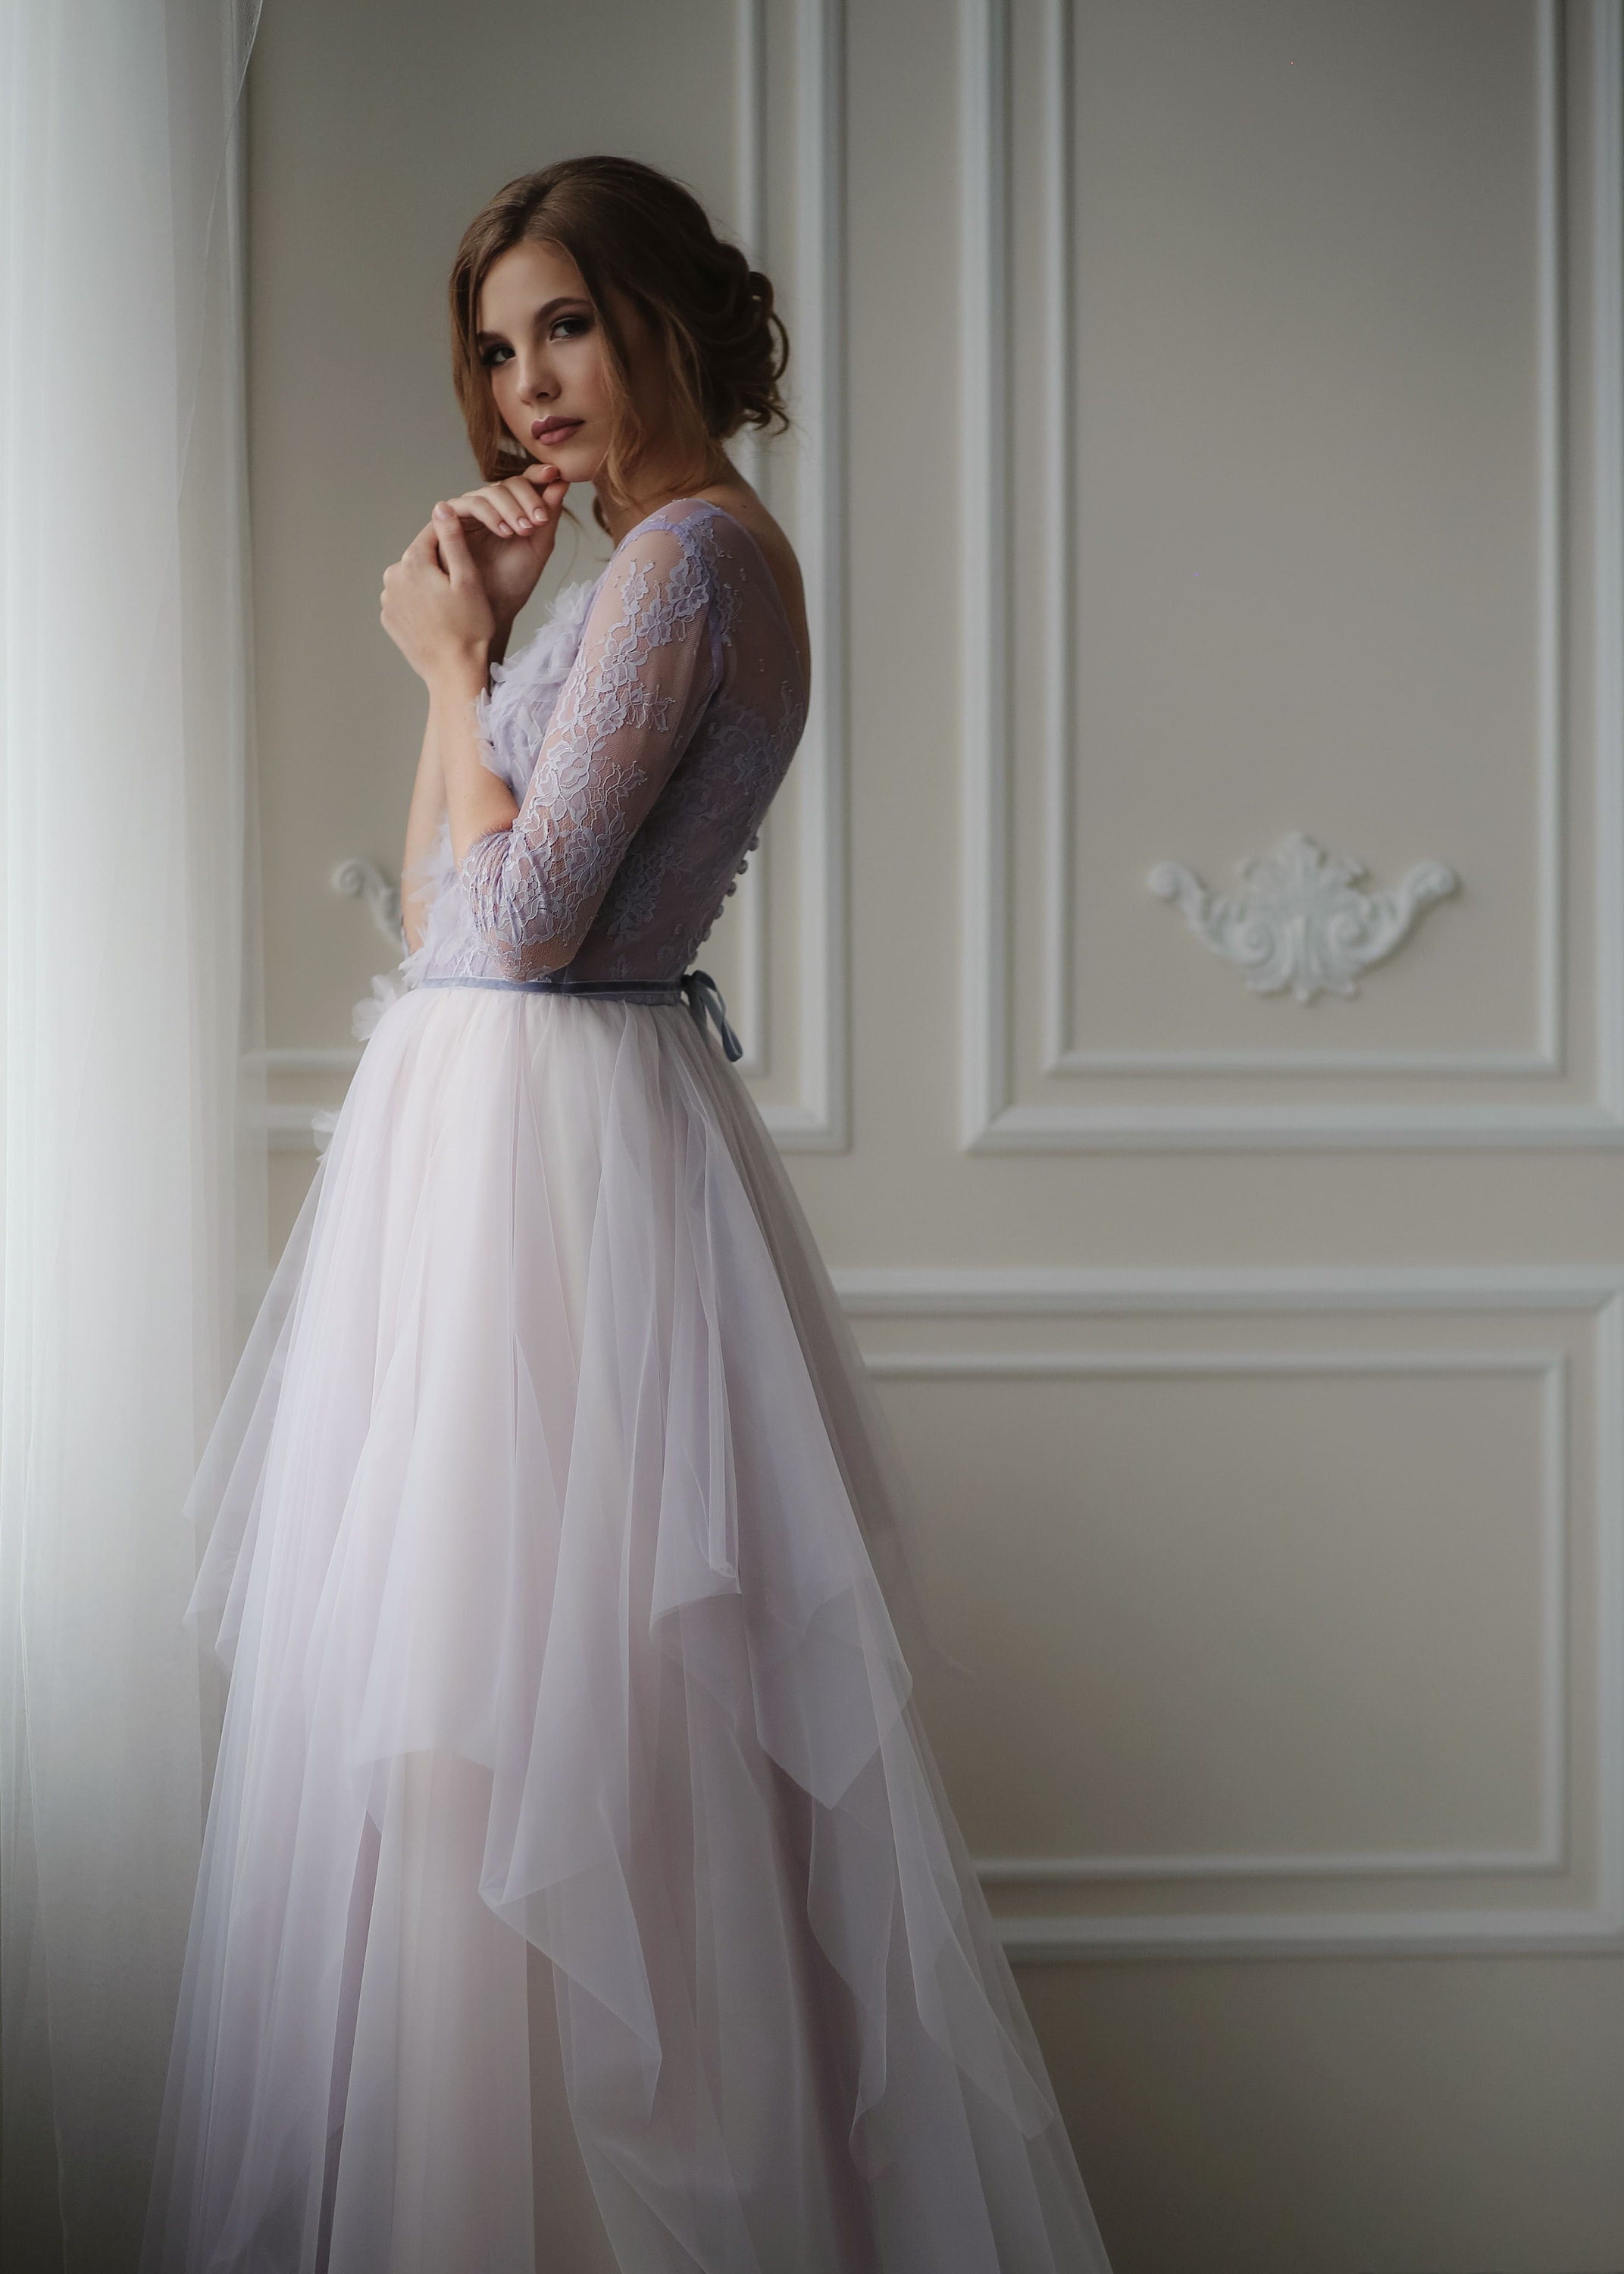 Purple lace wedding dress bohemian bride open back romantic | Etsy